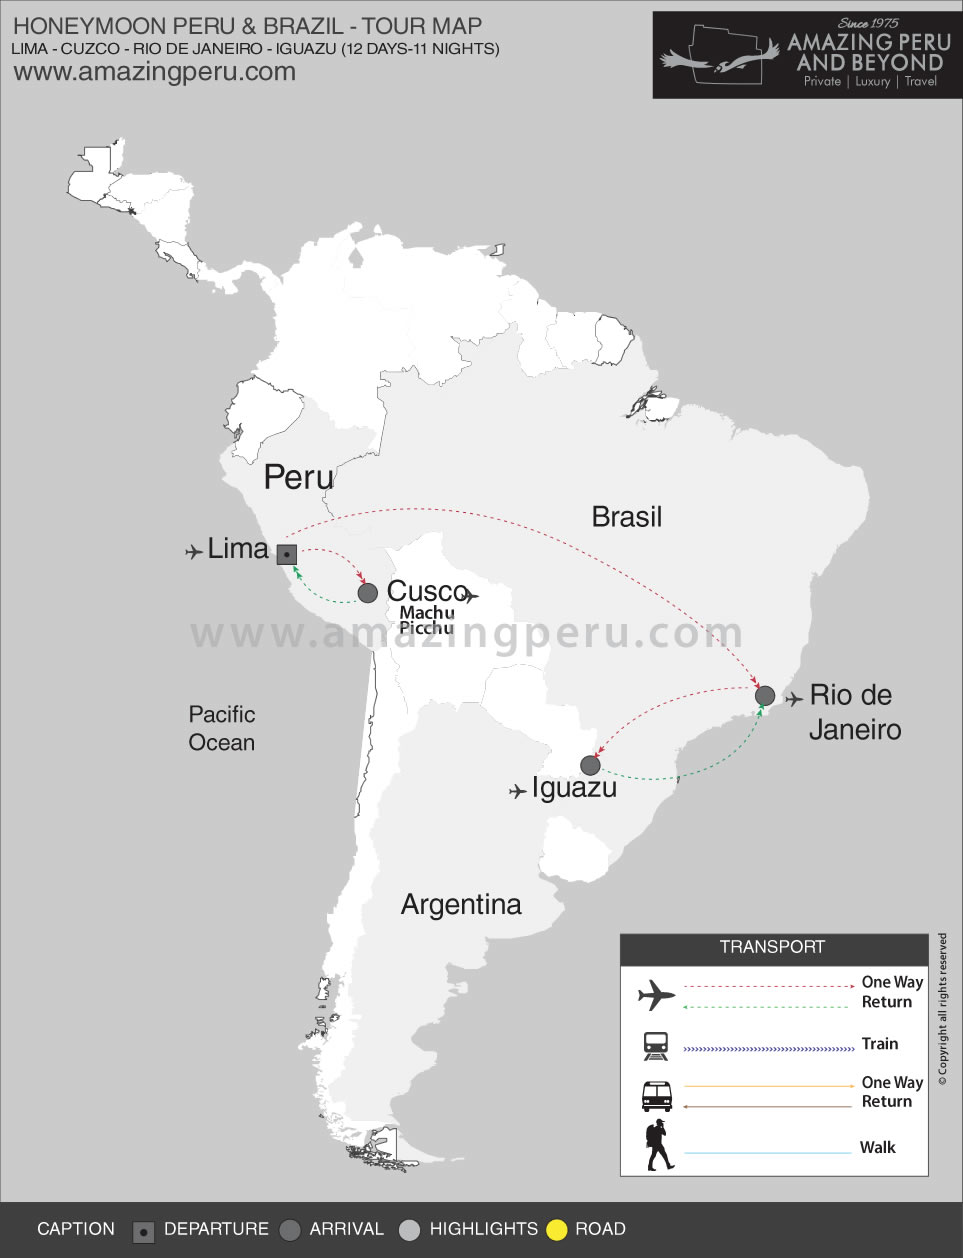 Peru Honeymoon Tour 4 Honeymoon Peru & Brazil - 12 days / 11 nights.